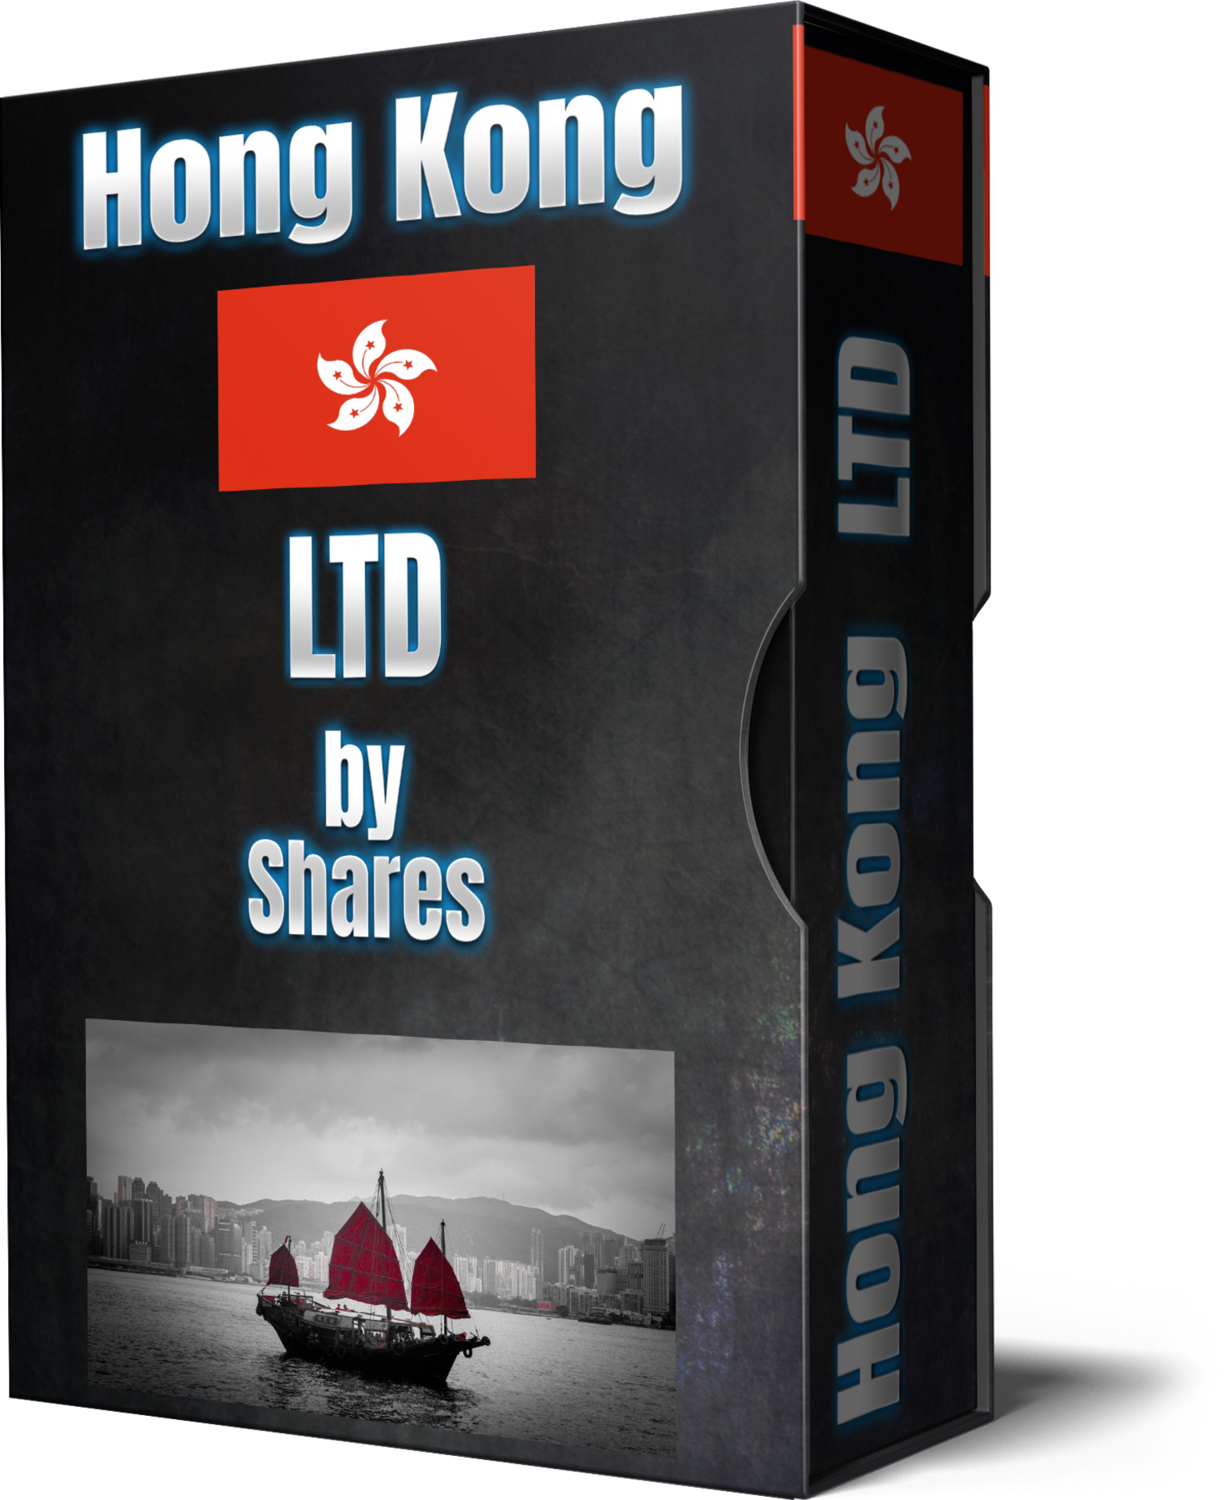 Hong Kong LTD by Shares